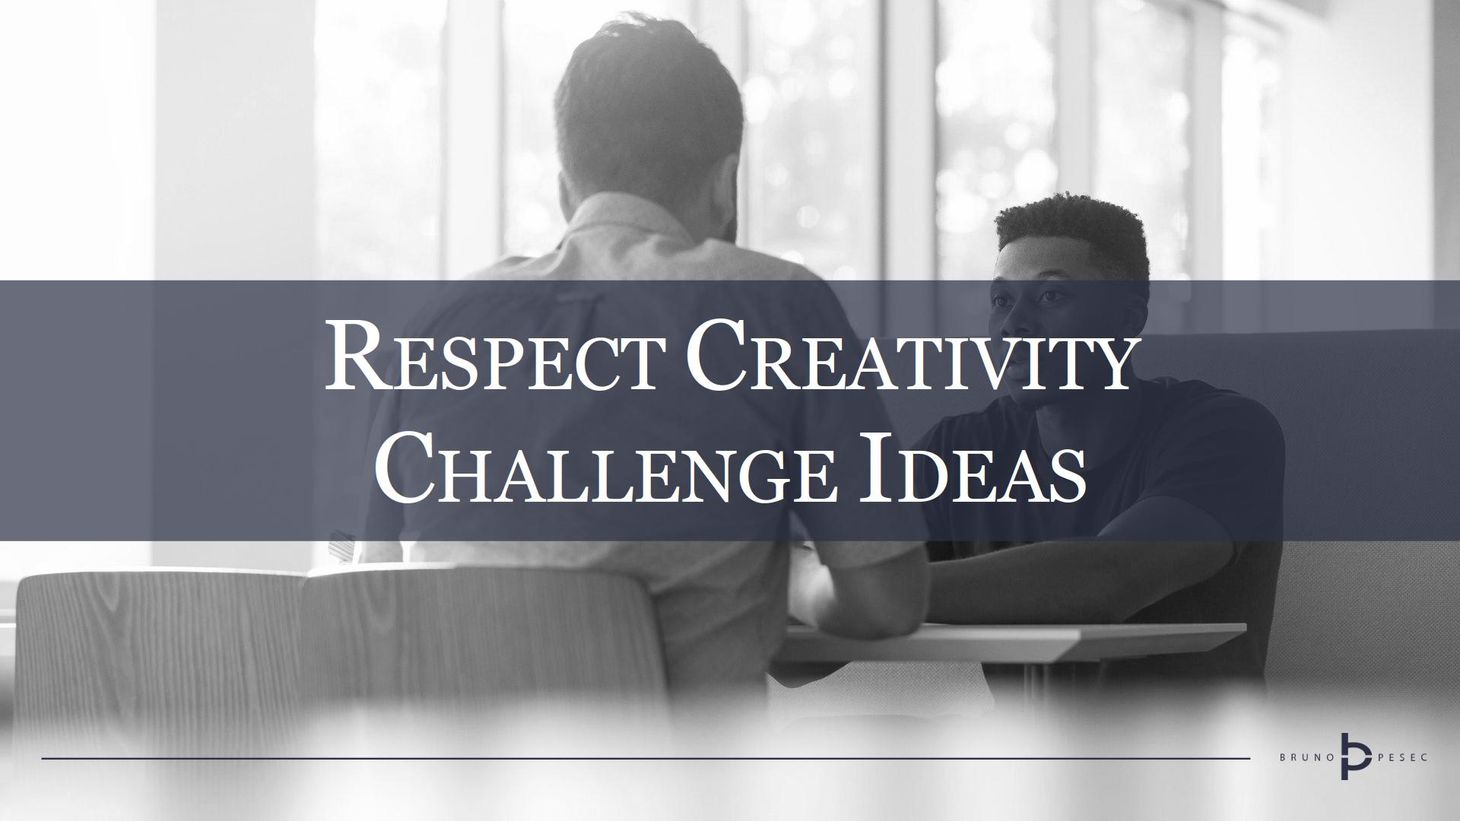 Respect creativity, challenge ideas